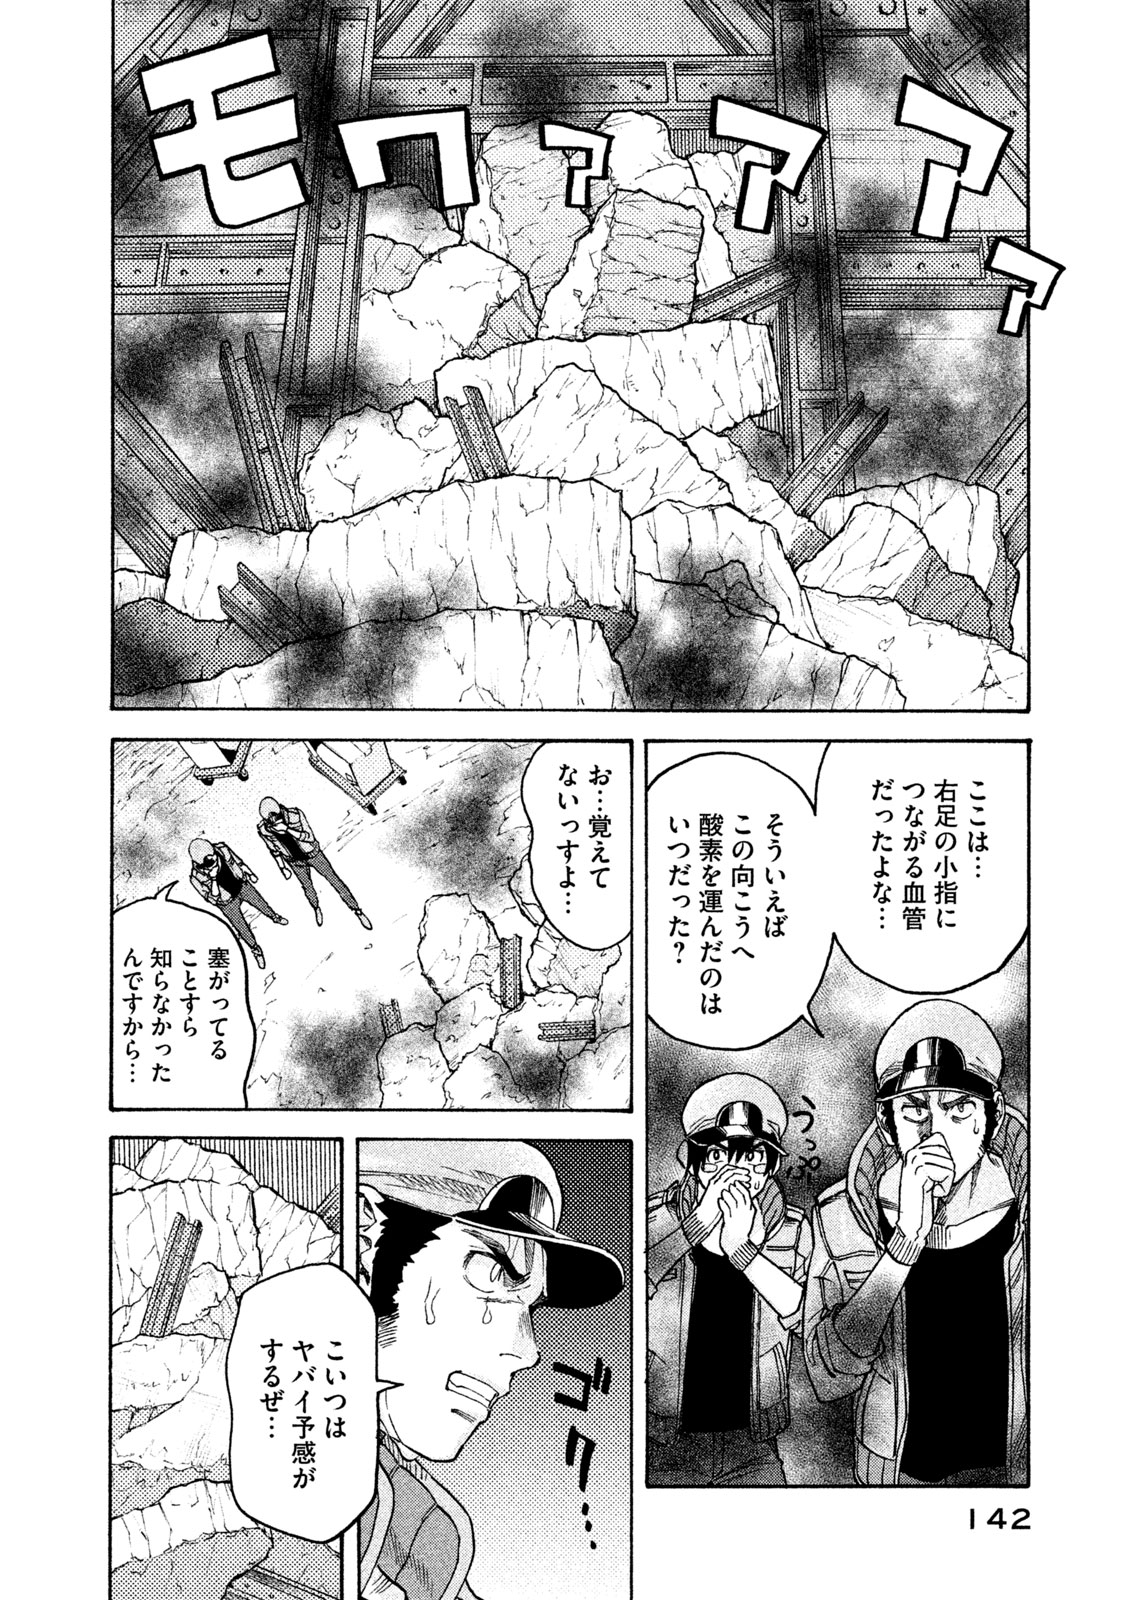 Hataraku Saibou BLACK - Chapter 24 - Page 16